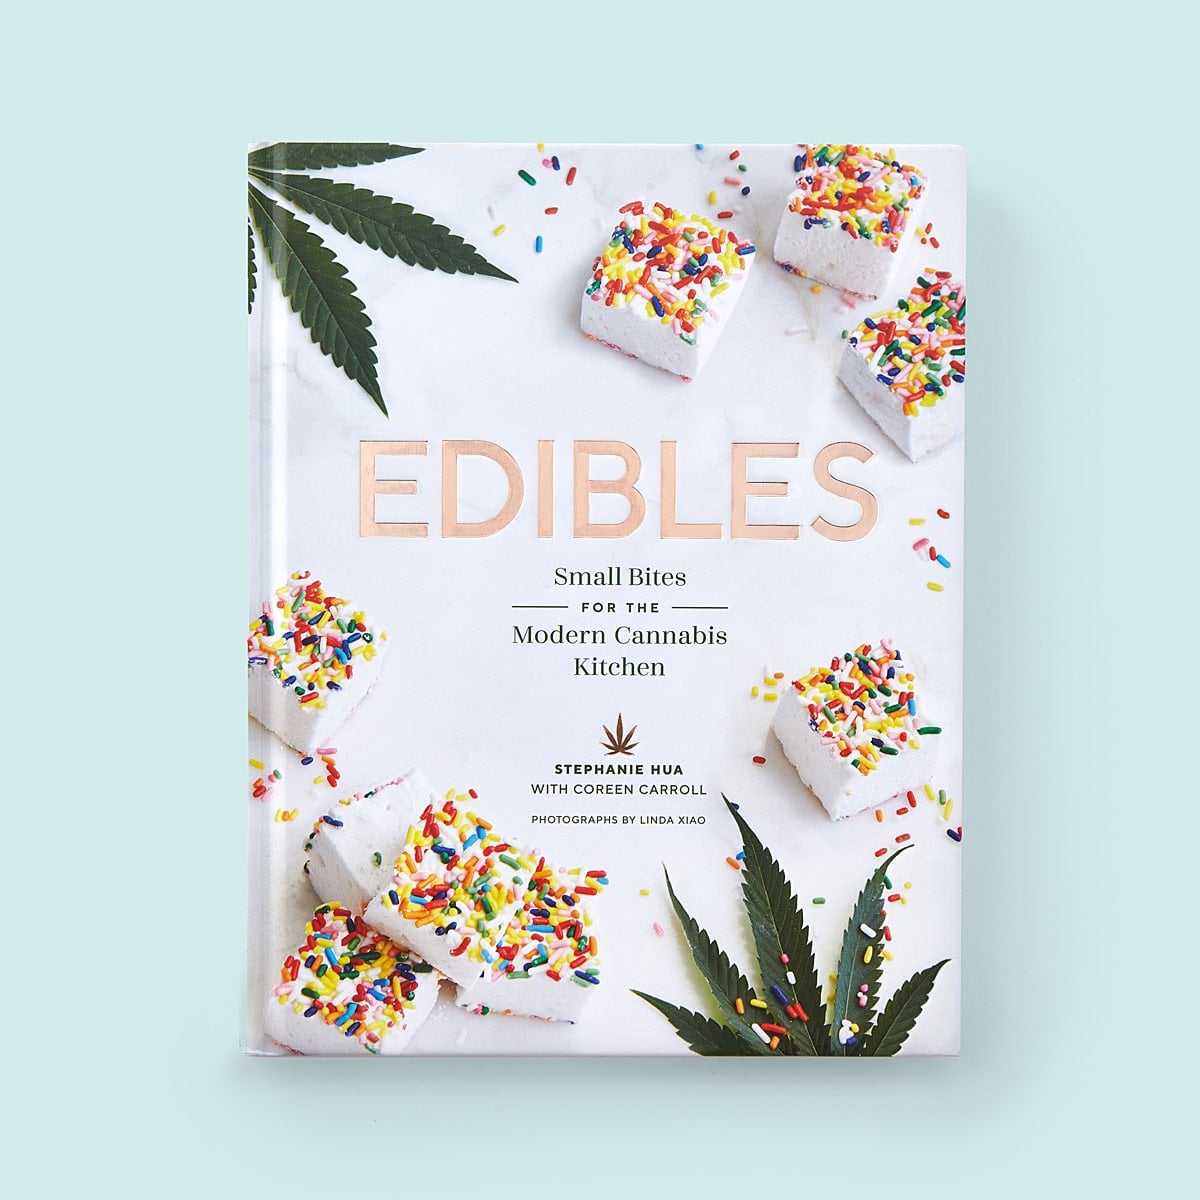 Marijuana Edibles Cookbook